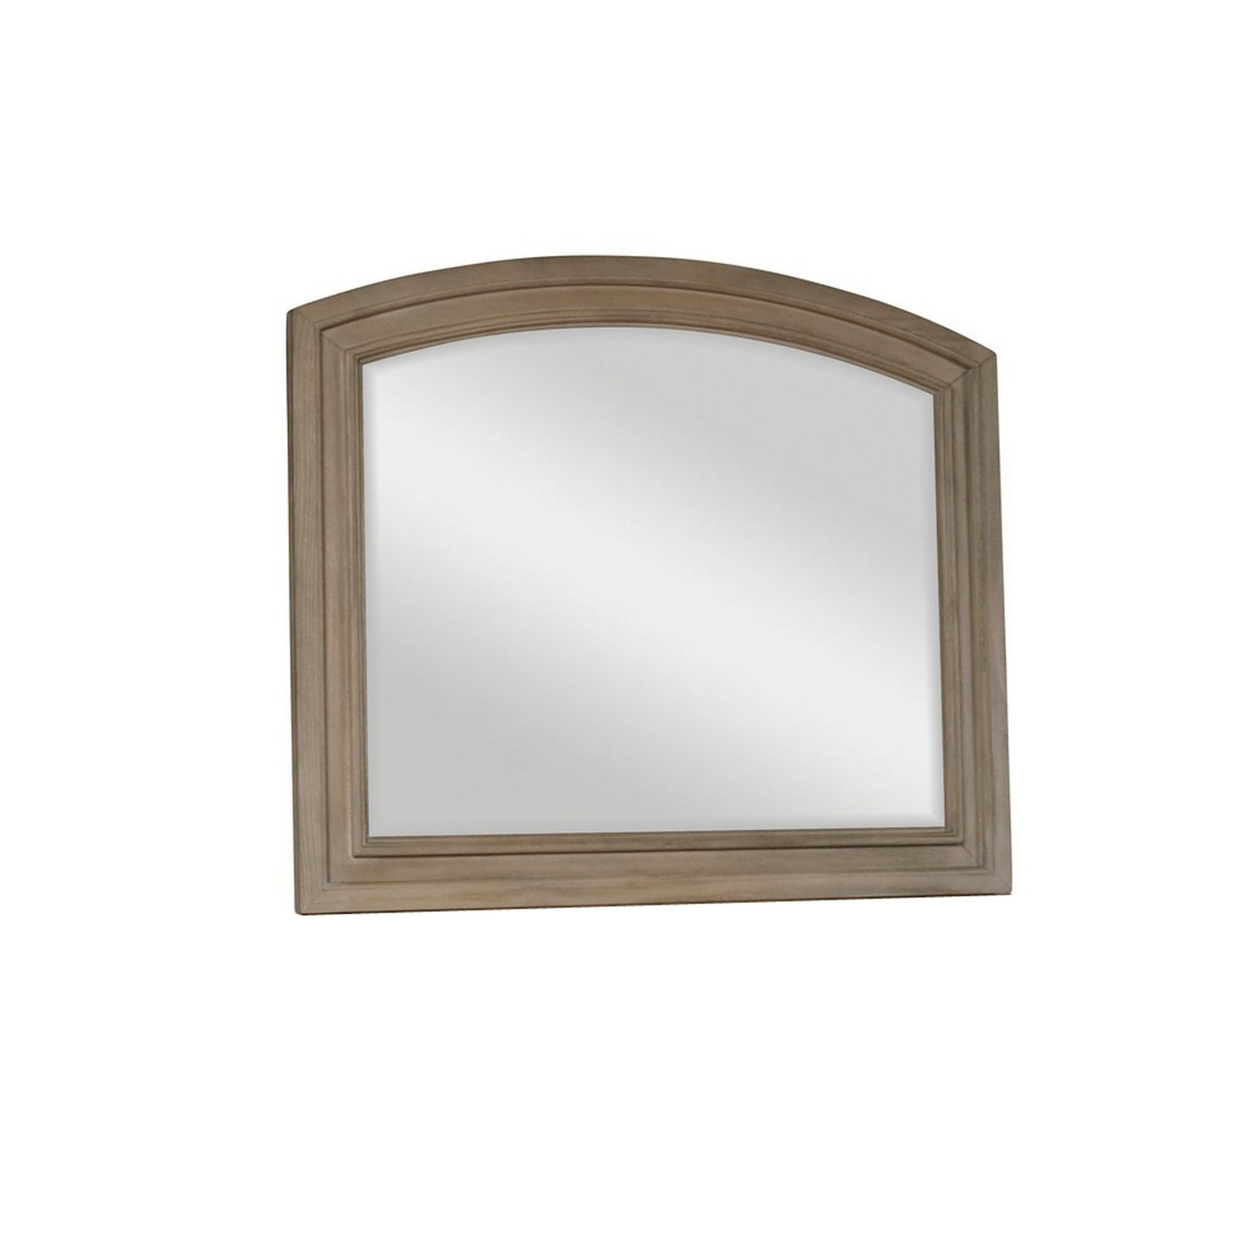 Jira 37 X 42 Dresser Mirror, Arched Curve, Multistep Brushed, Gray Wood -Saltoro Sherpi